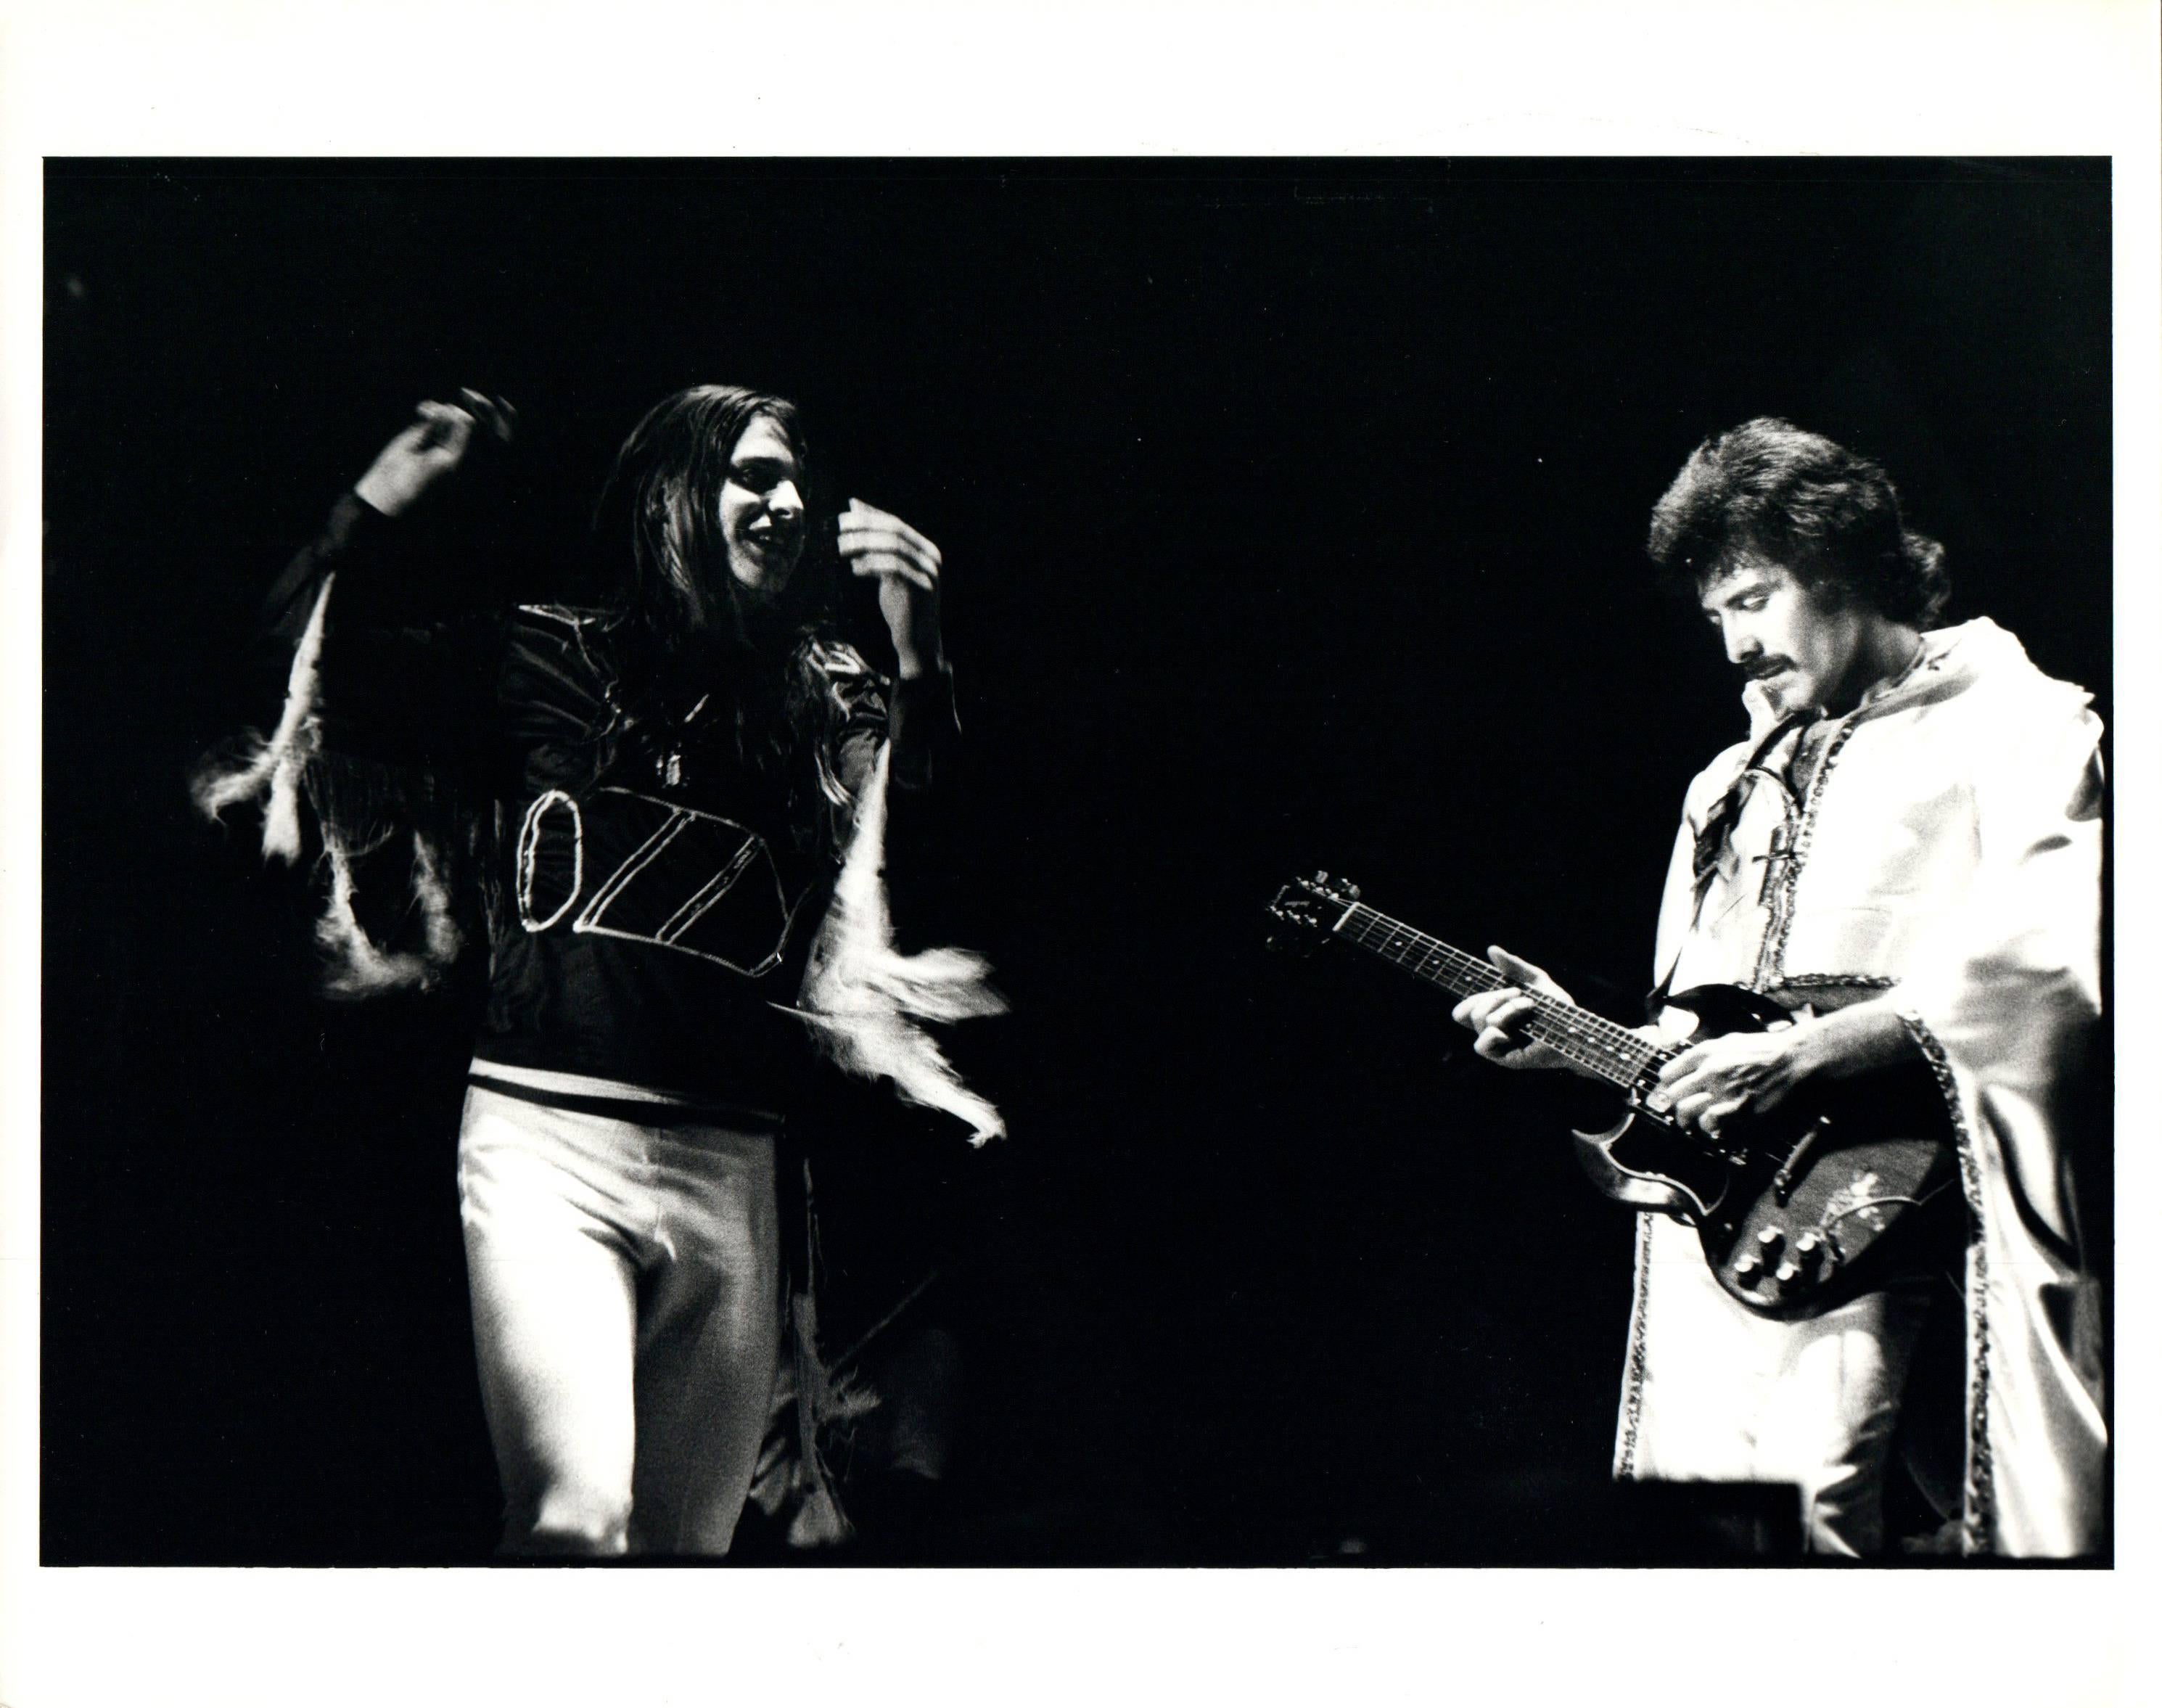 Paul Canty Black and White Photograph - Black Sabbath Having Fun on Stage Vintage Original Photograph